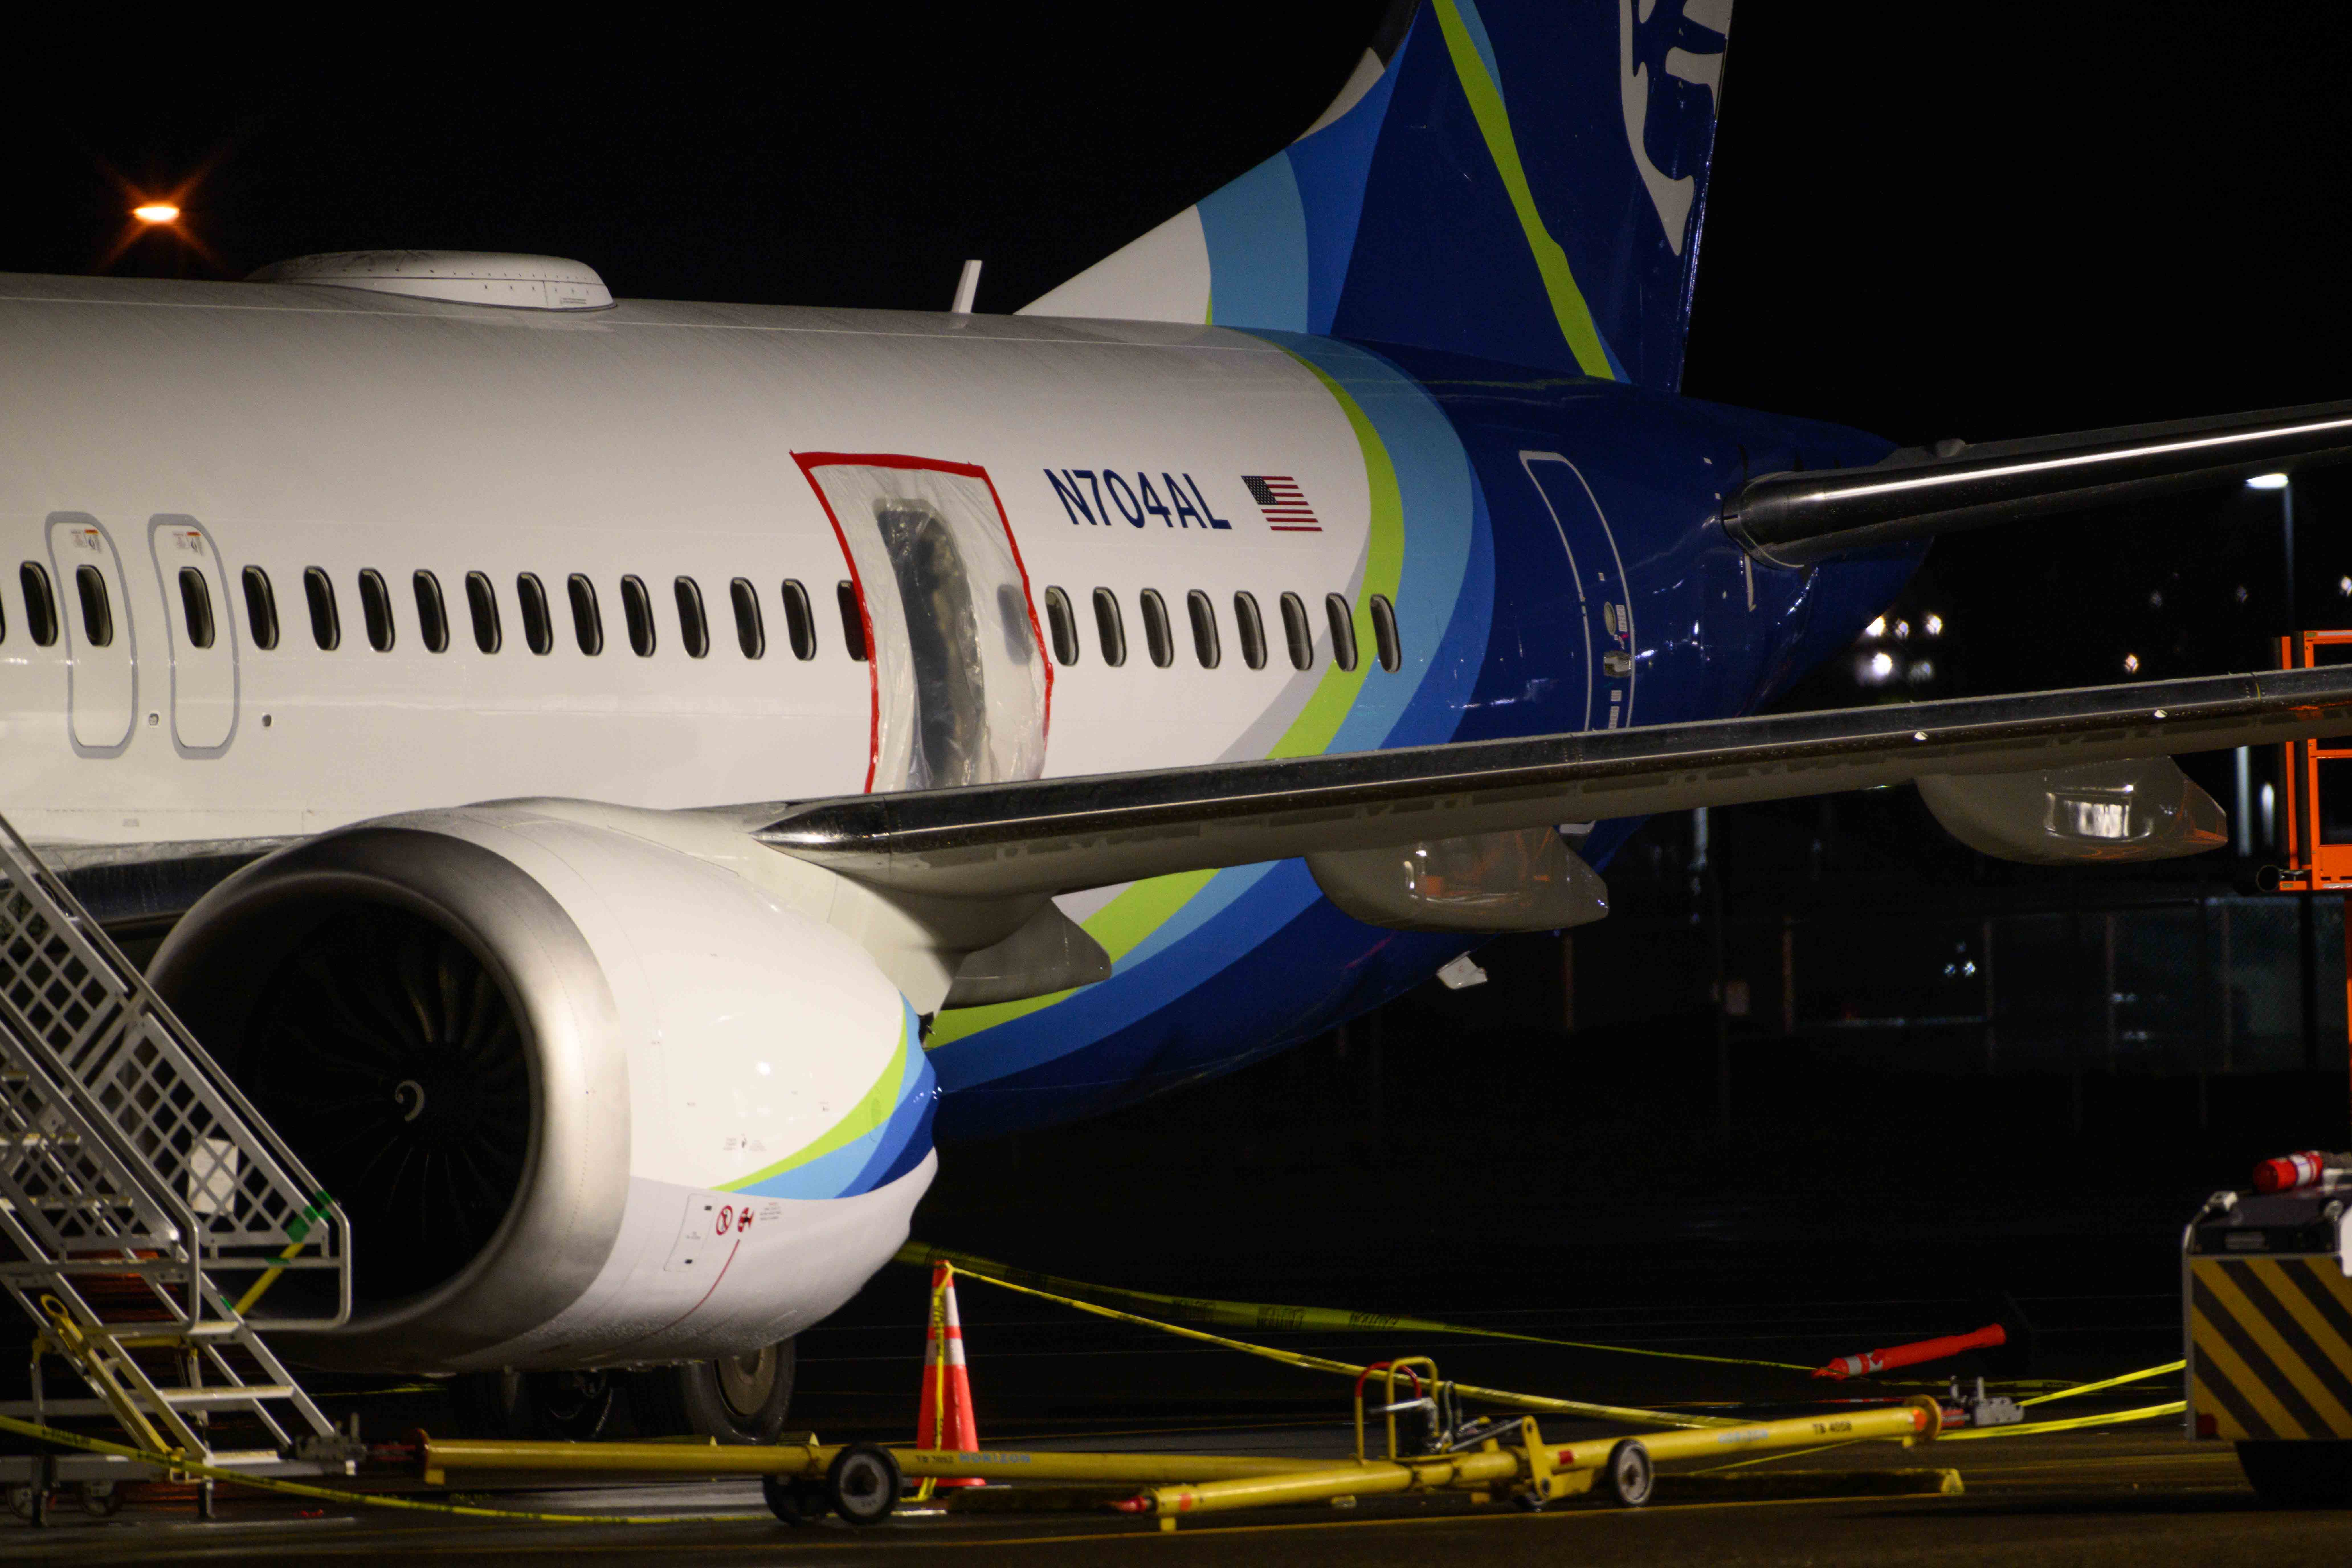 DOJ opens probe into Alaska Airlines plane blowout: report